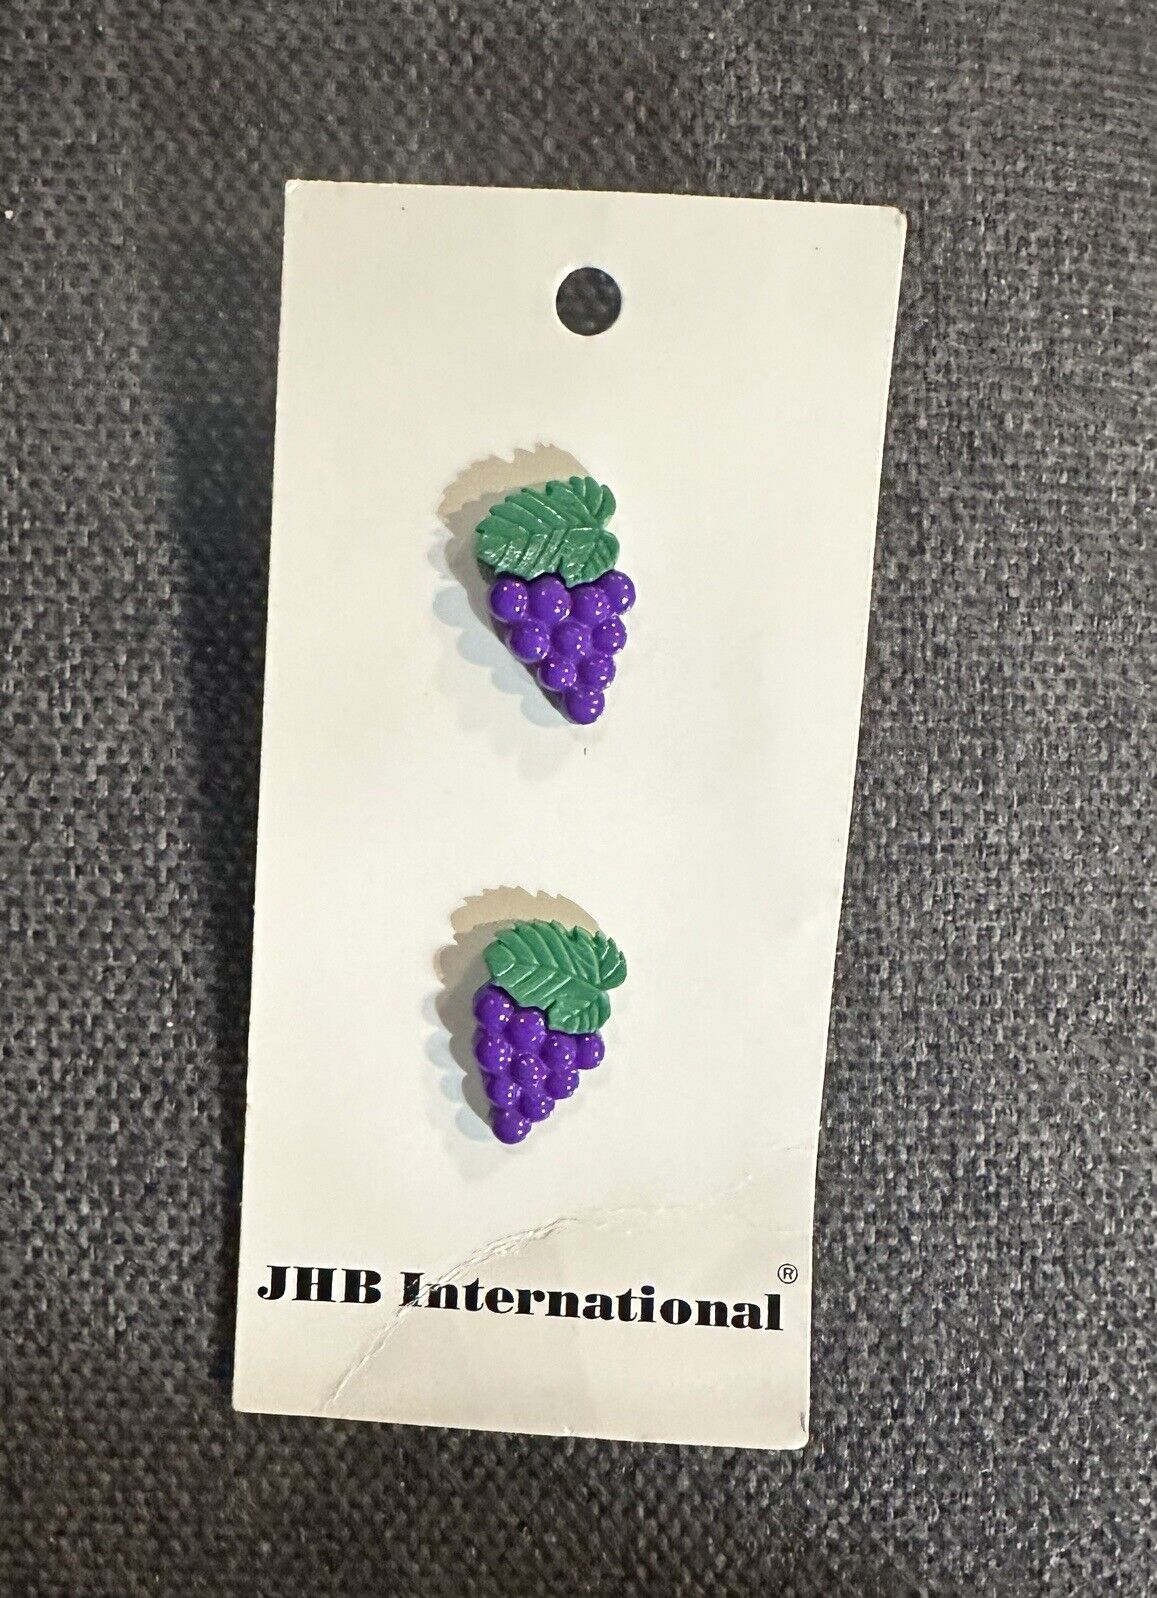 Vintage JHB International Buttons - Purple Grapes (Set of 2)